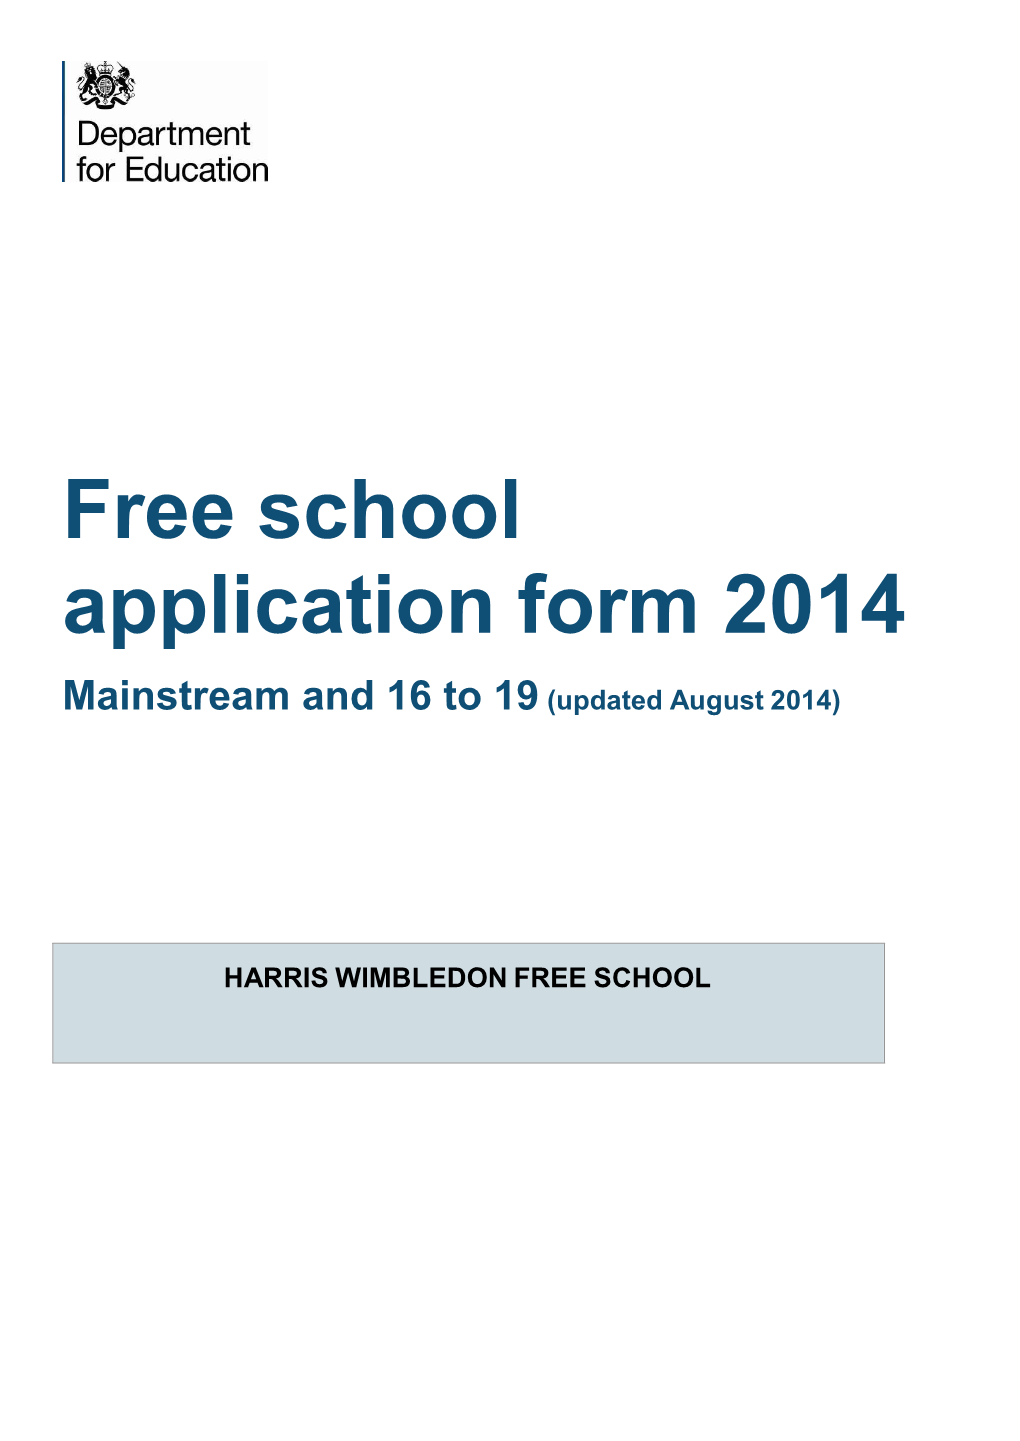 HARRIS WIMBLEDON FREE SCHOOL Contents